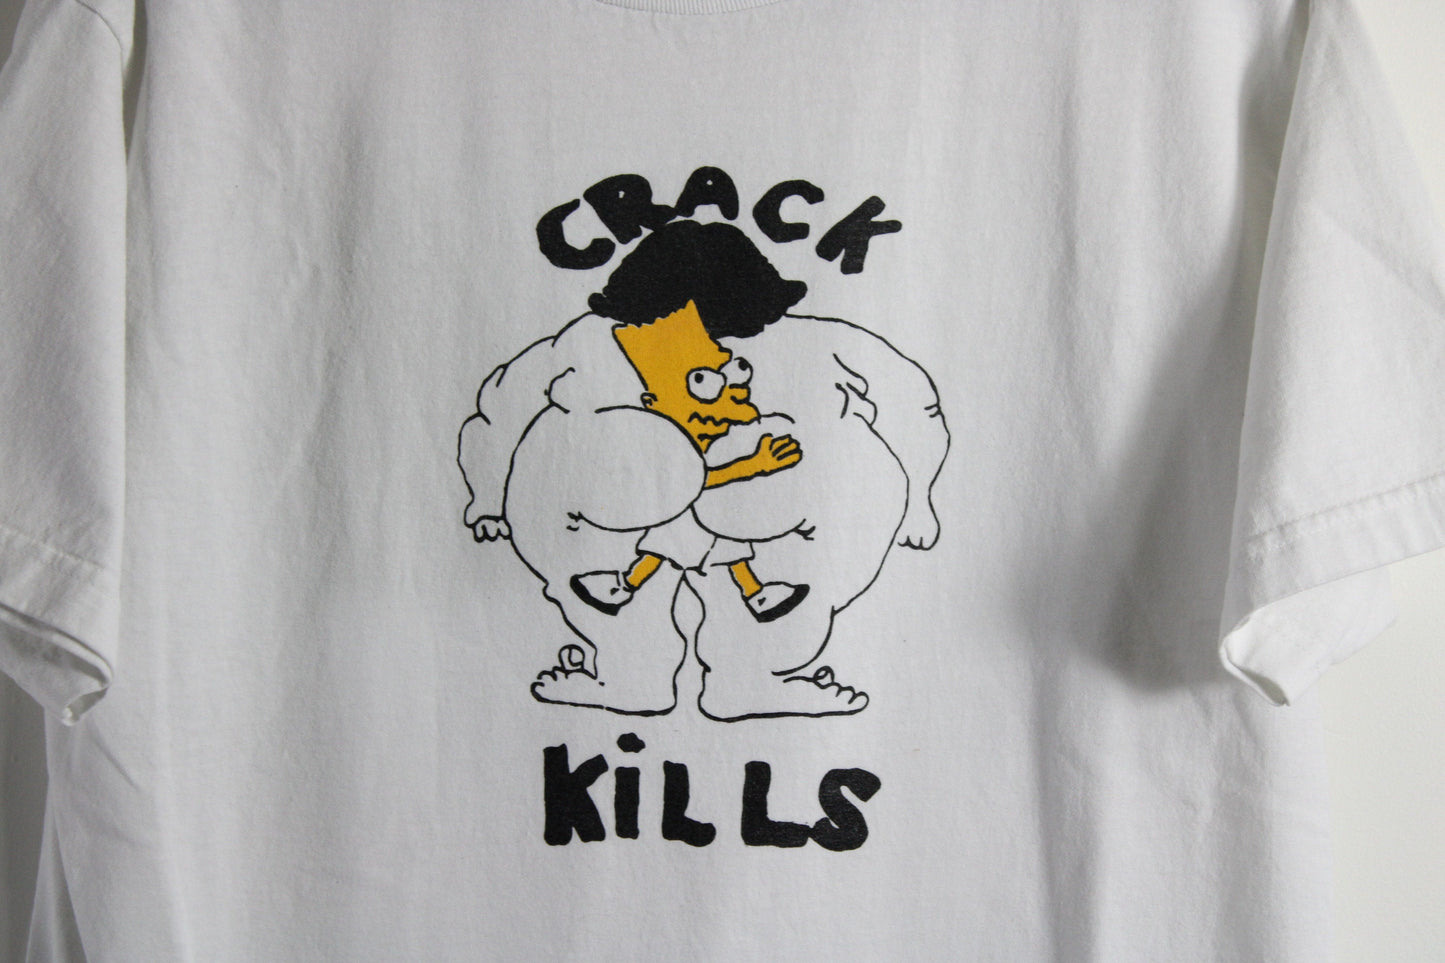 Bart-Simpson T-Shirt / Vintage Crack Kills Tee Shirt / 90s / 2000s Y2k Cartoon Graphic